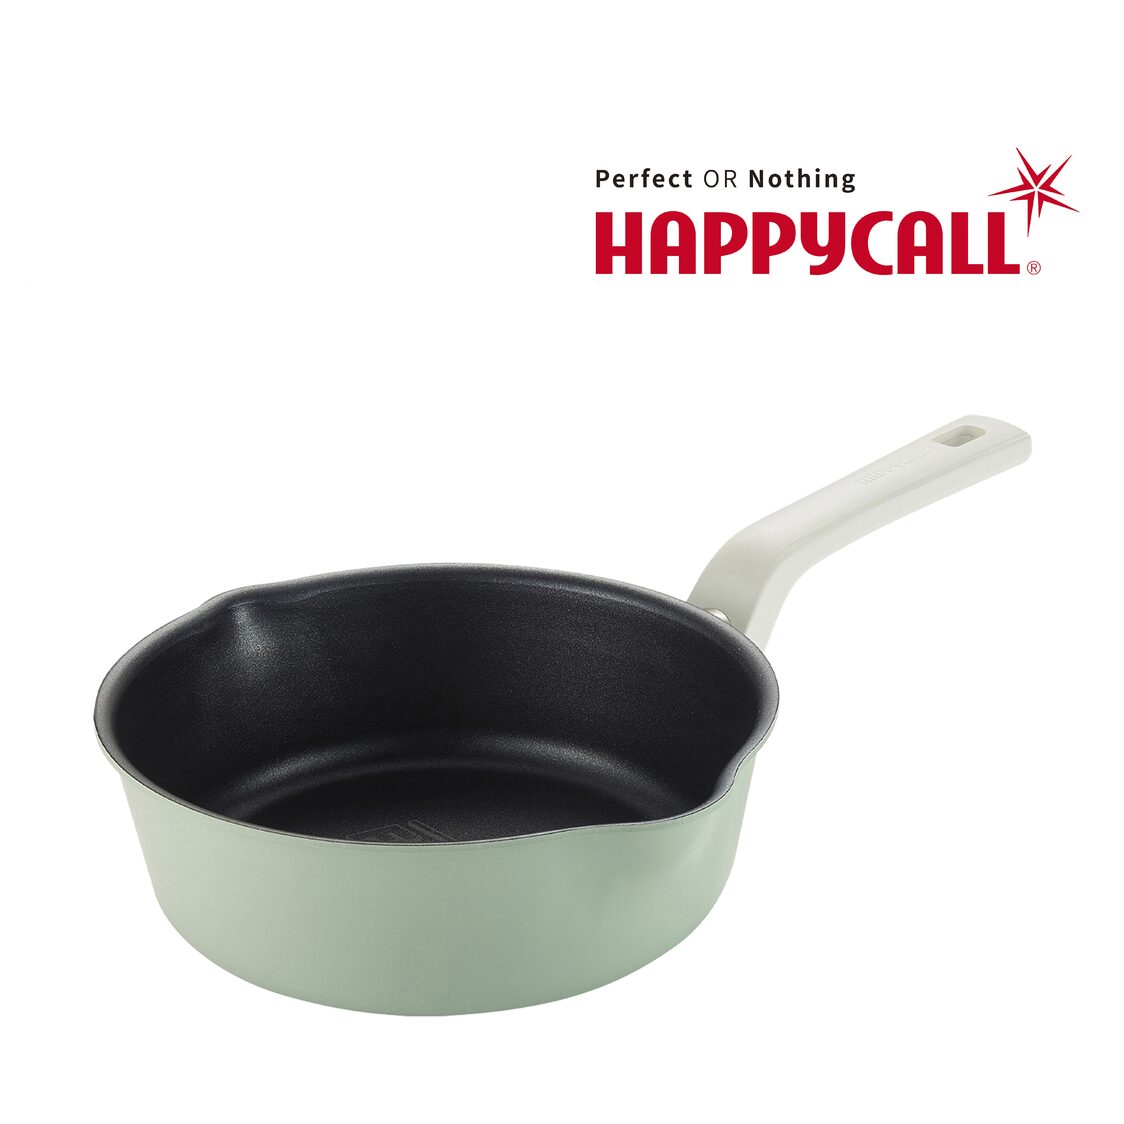 Happycall 20cm IH Non-Stick Flex Pan - Lollipop Mint 3001-0520